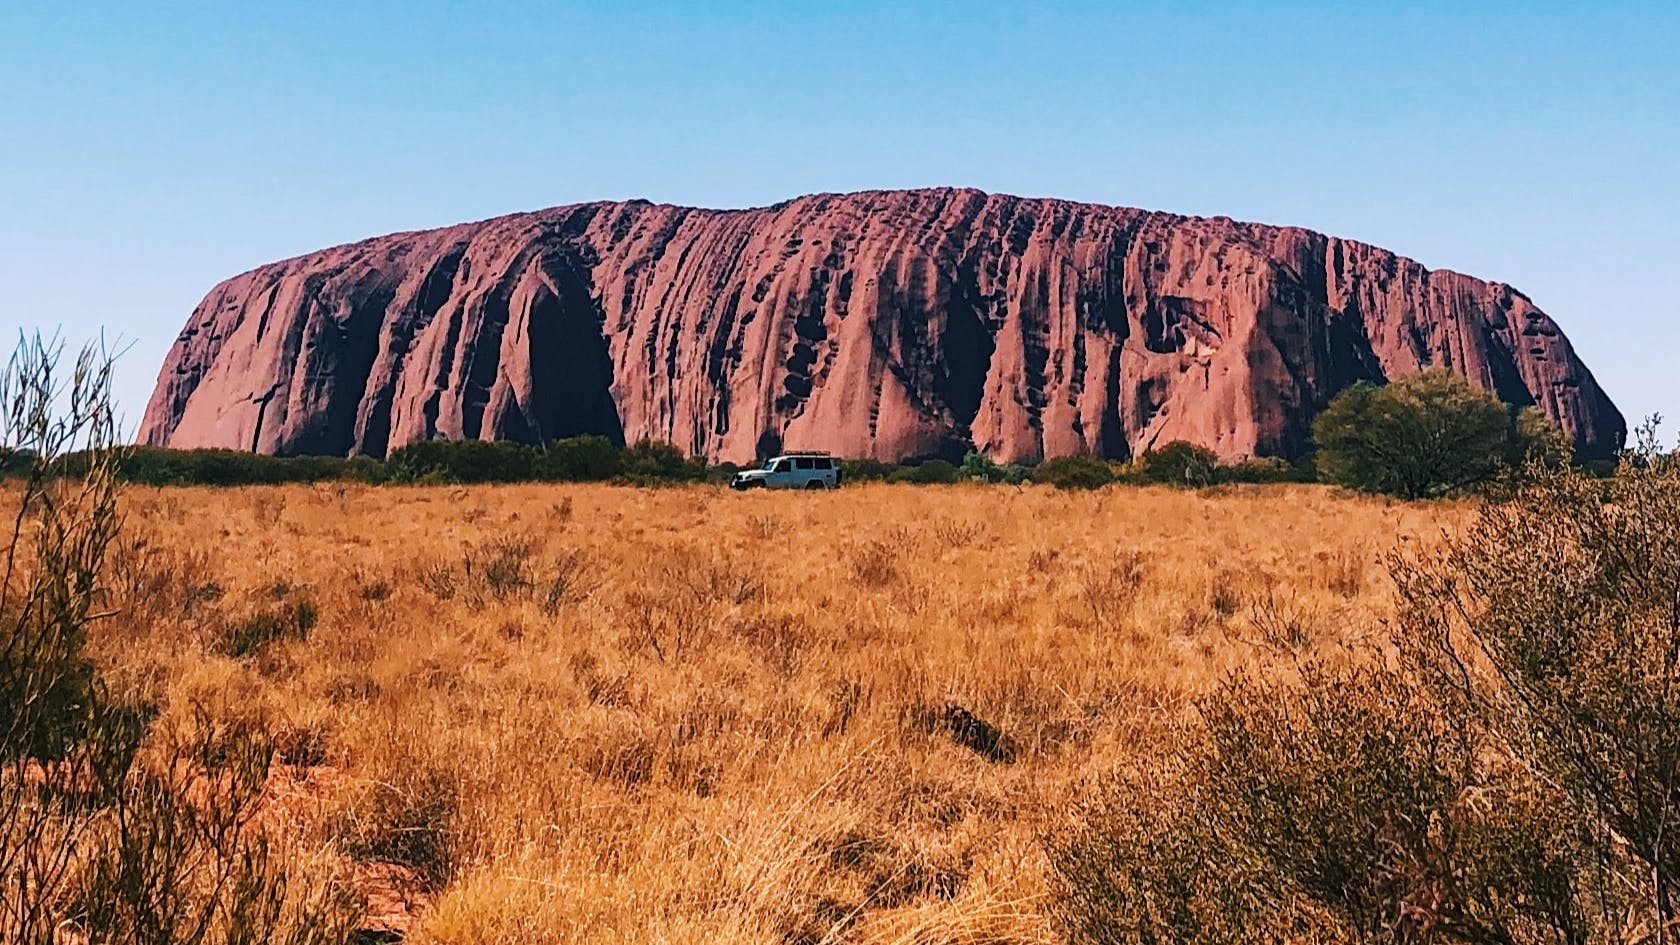 The iconic Uluru rock formation in Australia